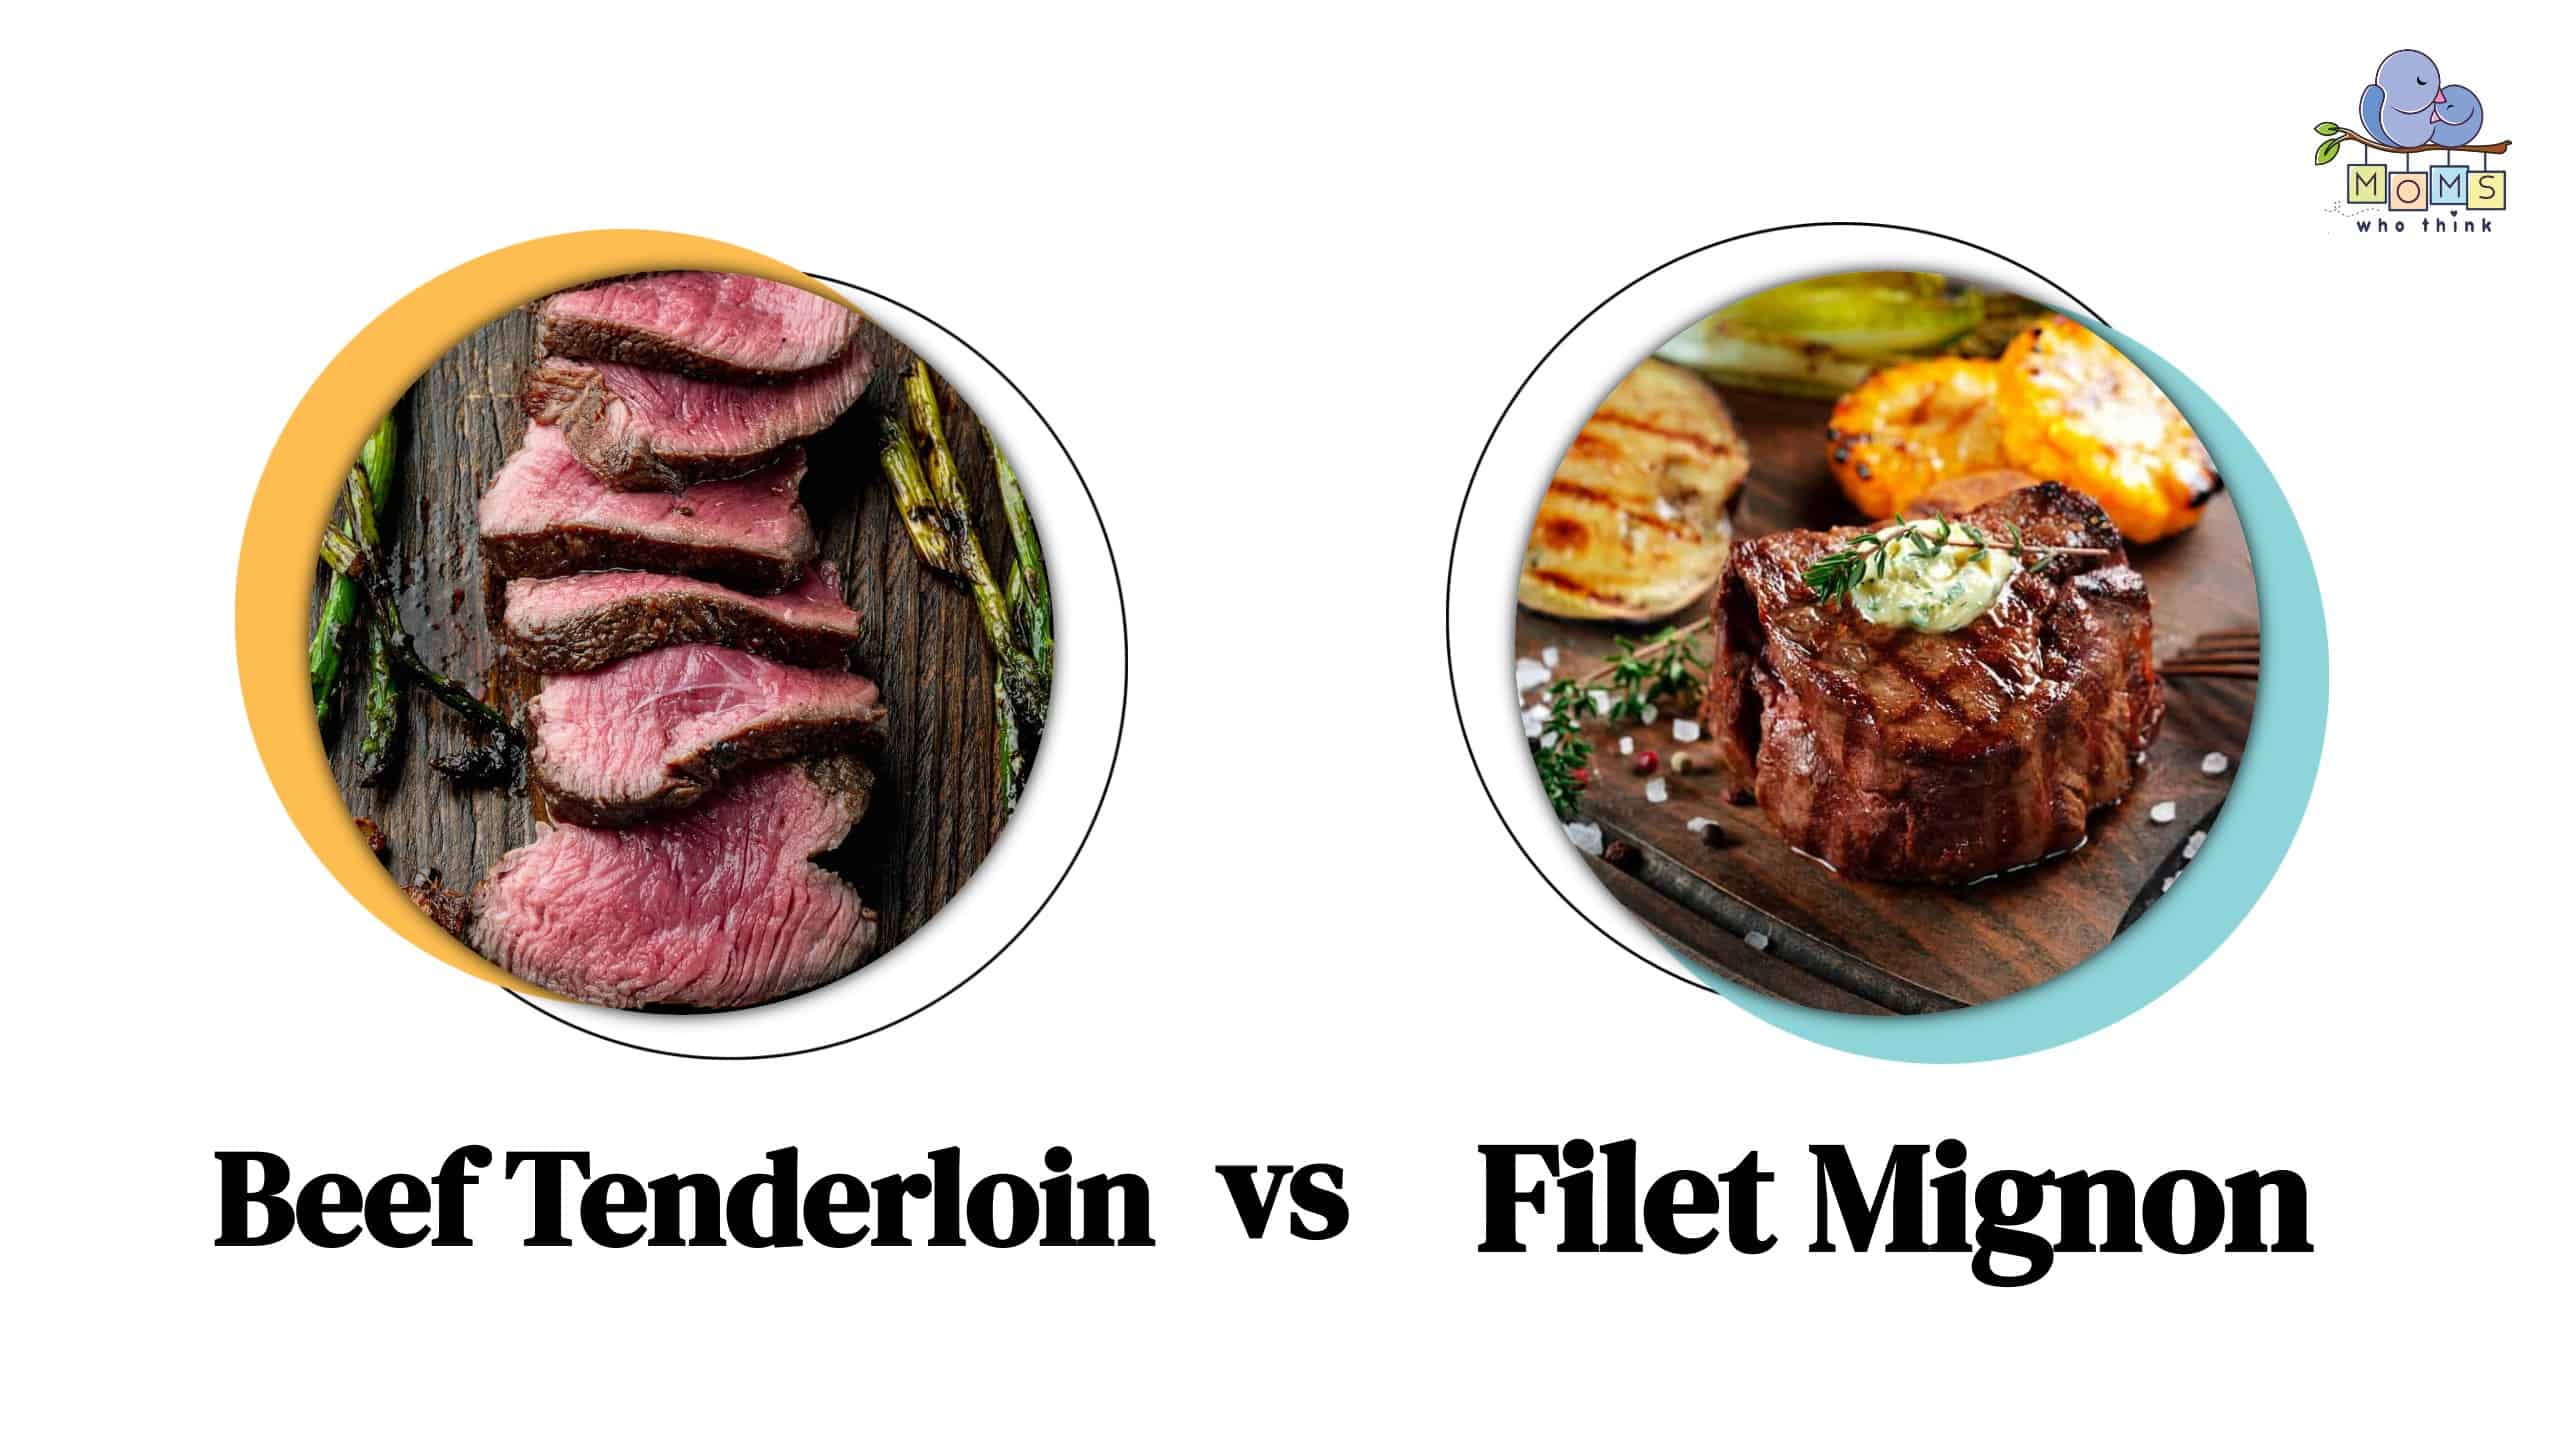 What is a Filet Mignon?